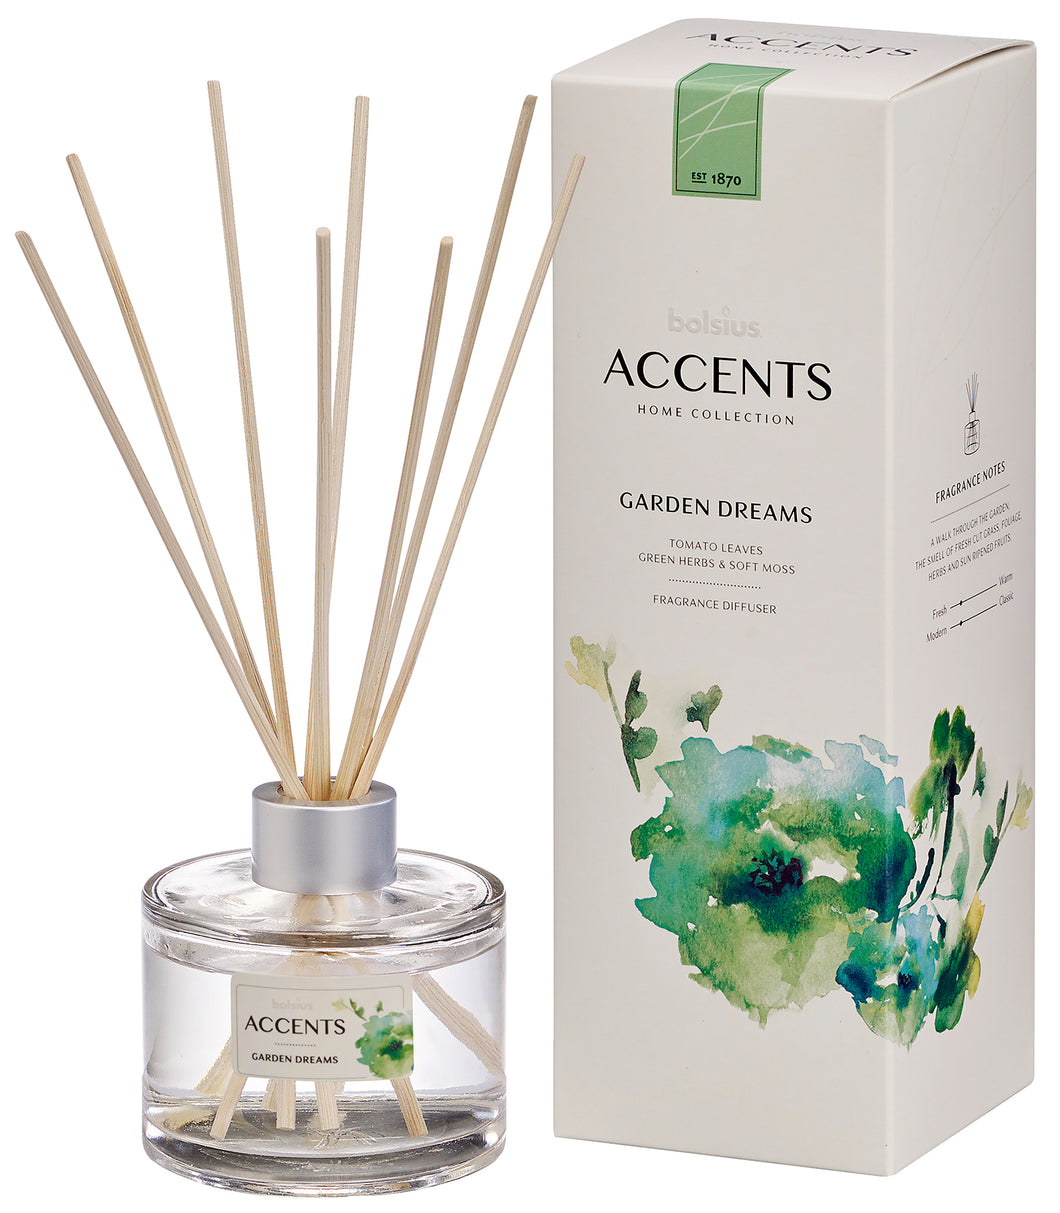 Bolsius Accents Fragrance Diffuser, Garden Dreams – 100ml